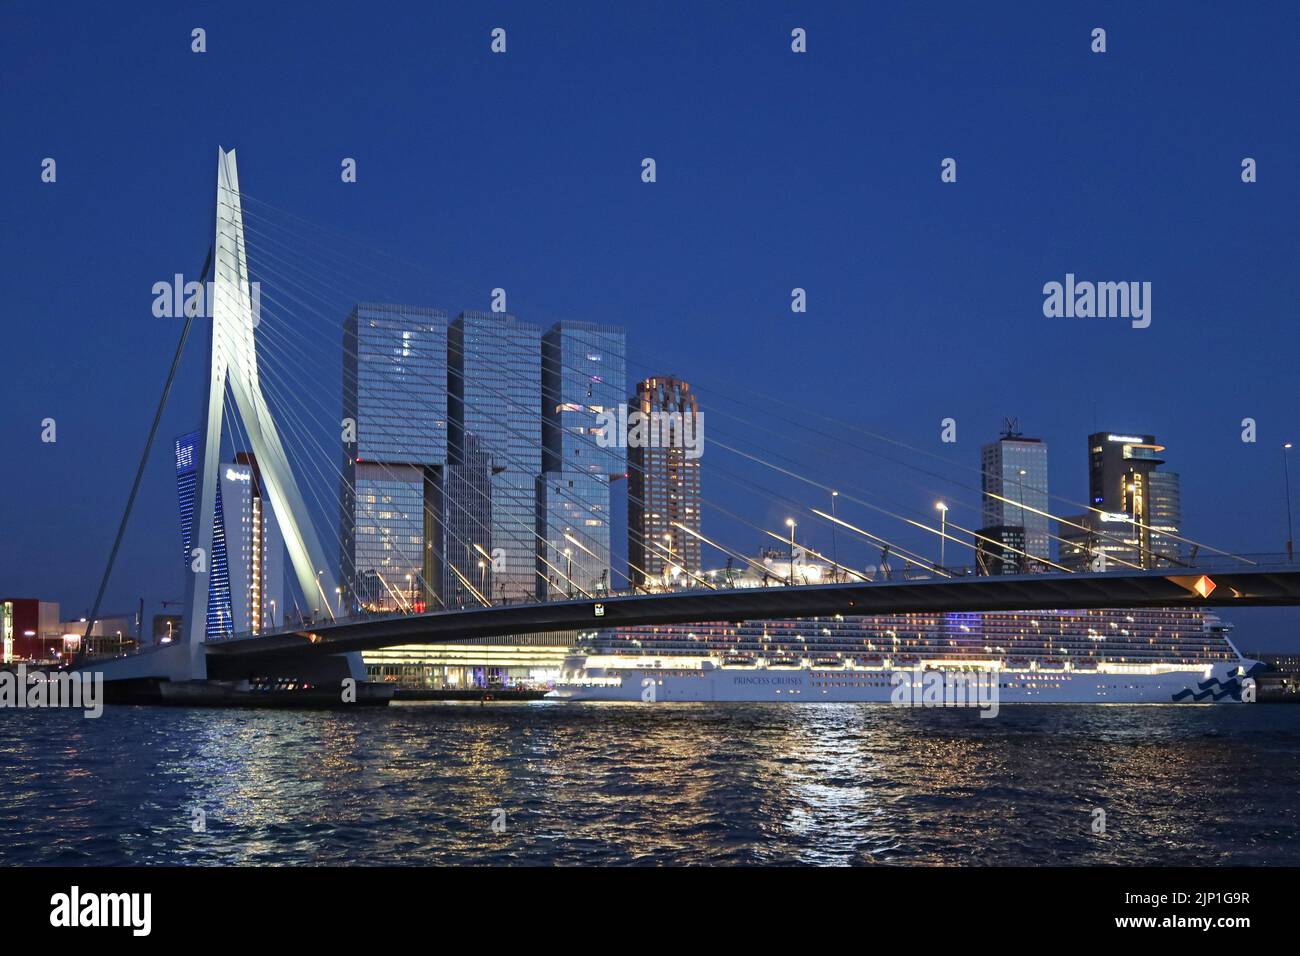 Rotterdam, Paesi Bassi. Ponte Erasmus visto da nord. Mostra le torri De Rotterdam (centro) e la nave Princess Cruises Enchanted Princess. Foto Stock